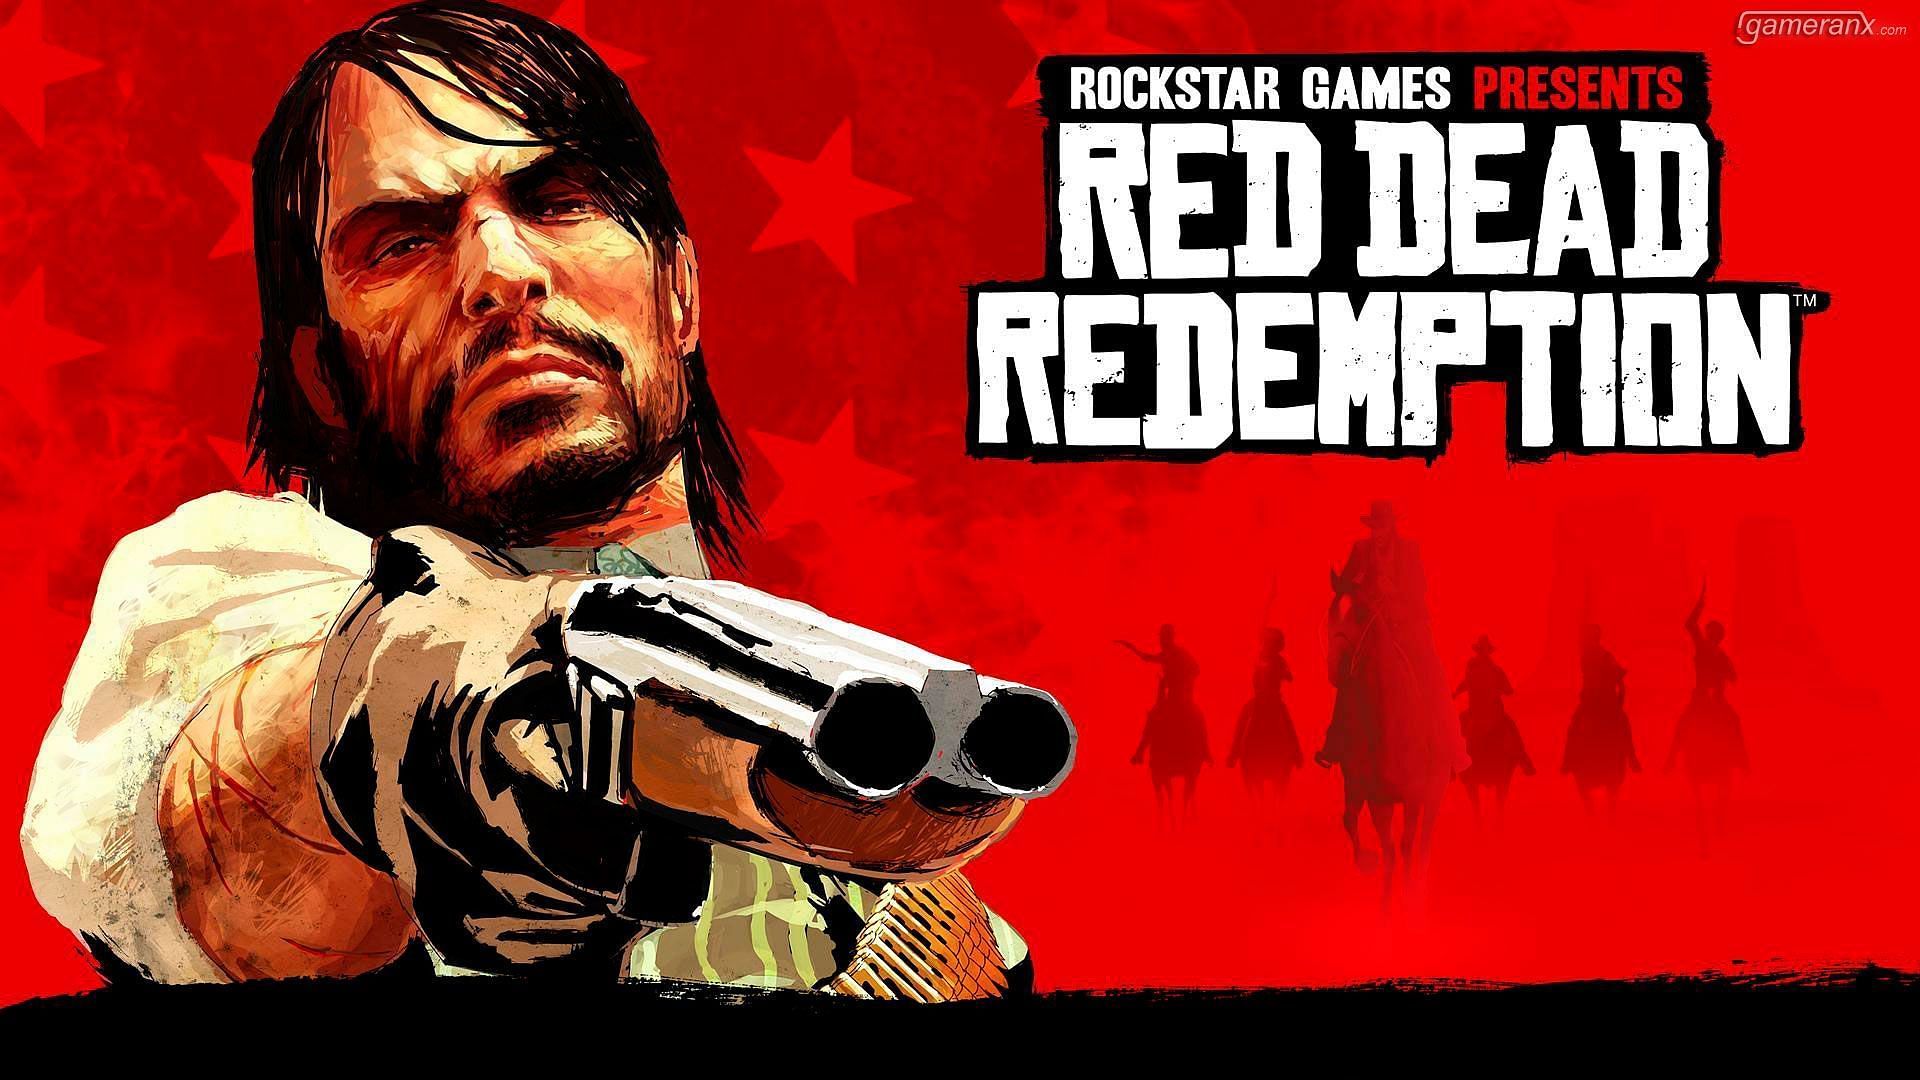 Xbox 360 - Red Dead Redemption (Image via Rockstar Games)